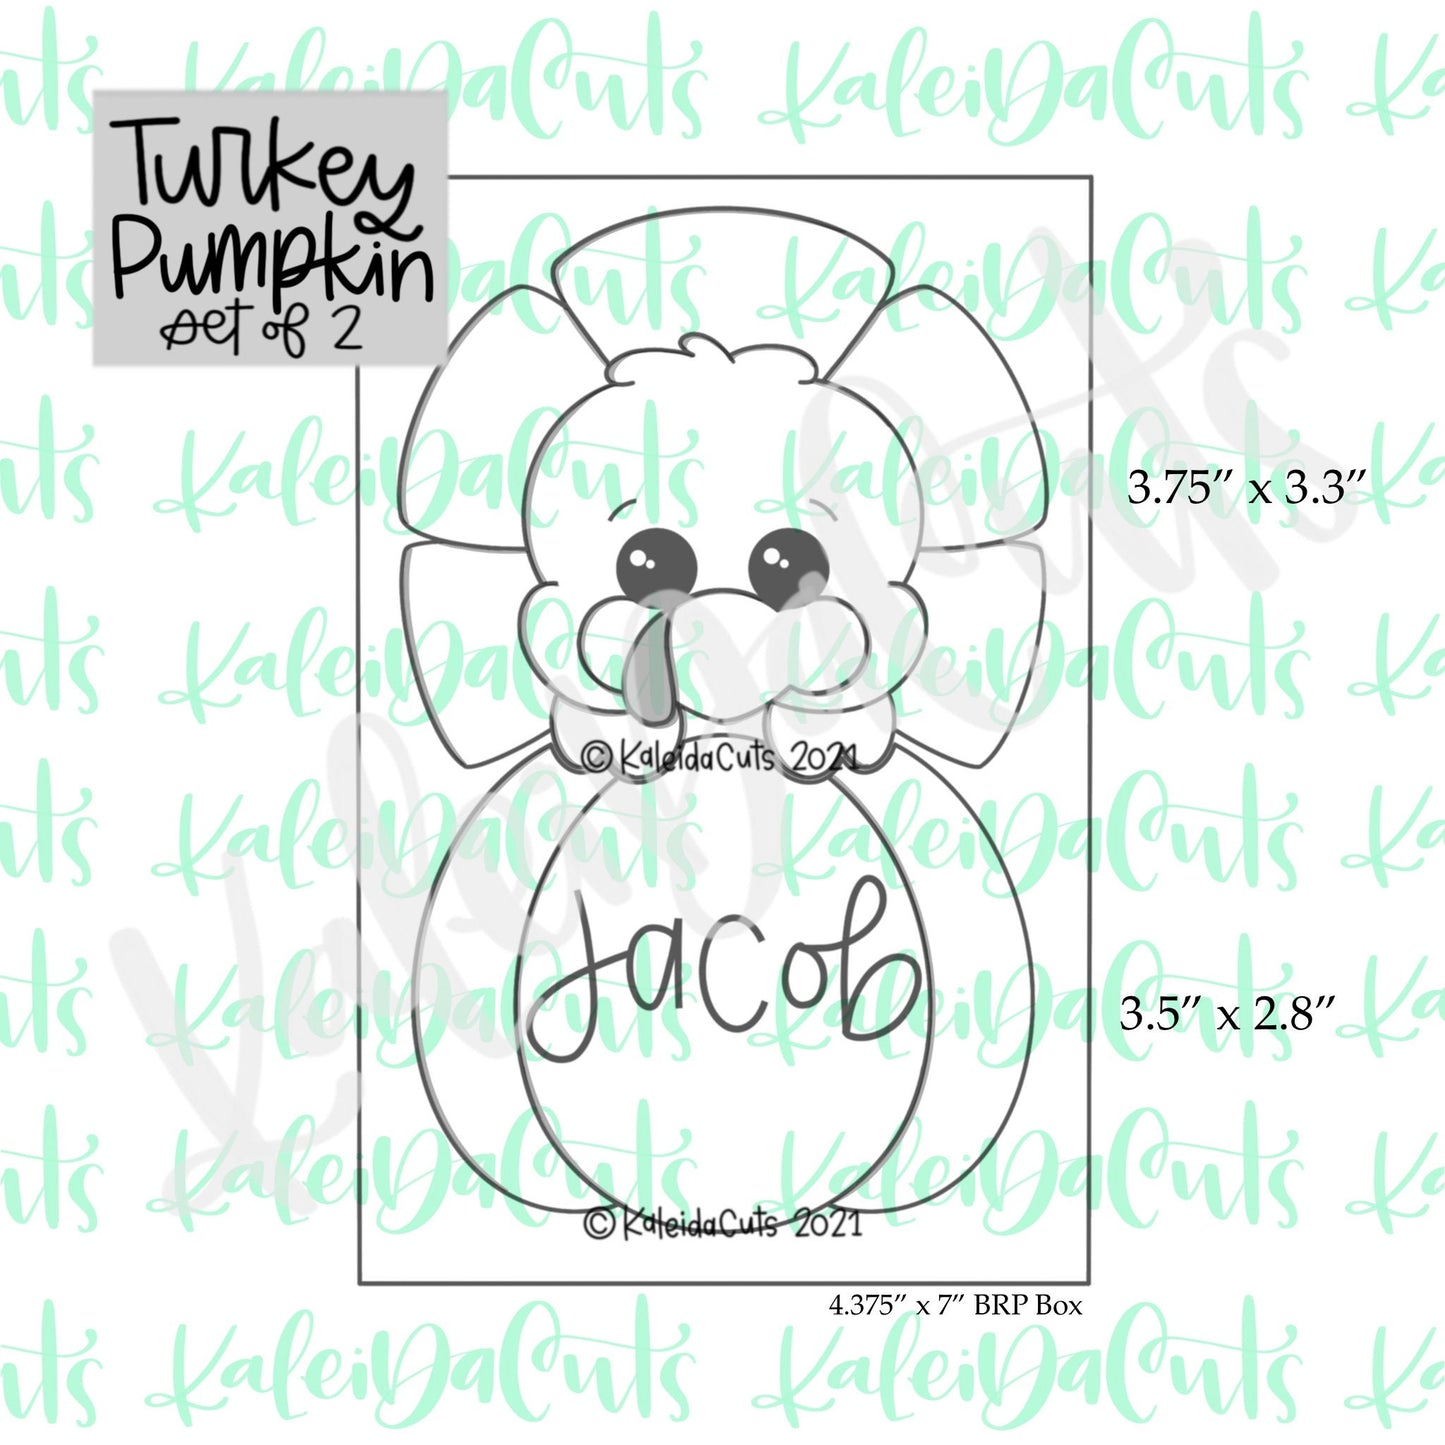 Turkey Pumpkin Cookie Cutter - Set of 2